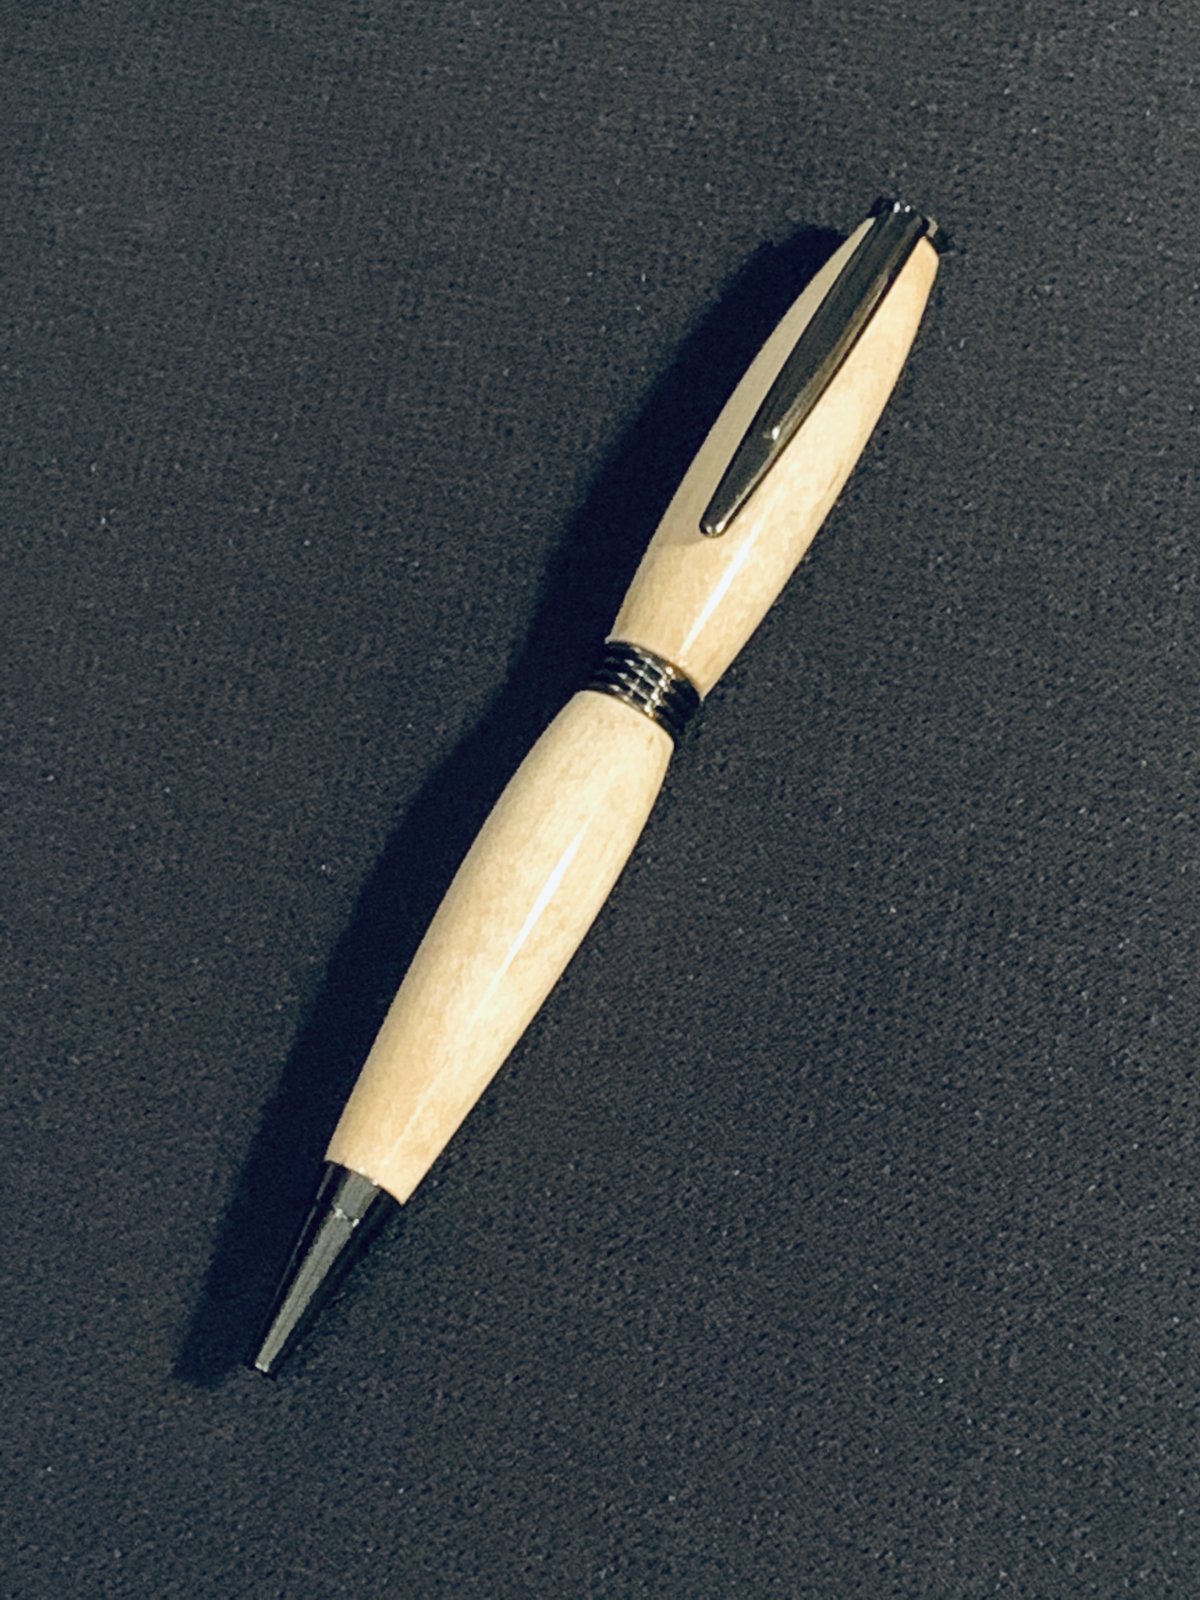 Second pen.jpg